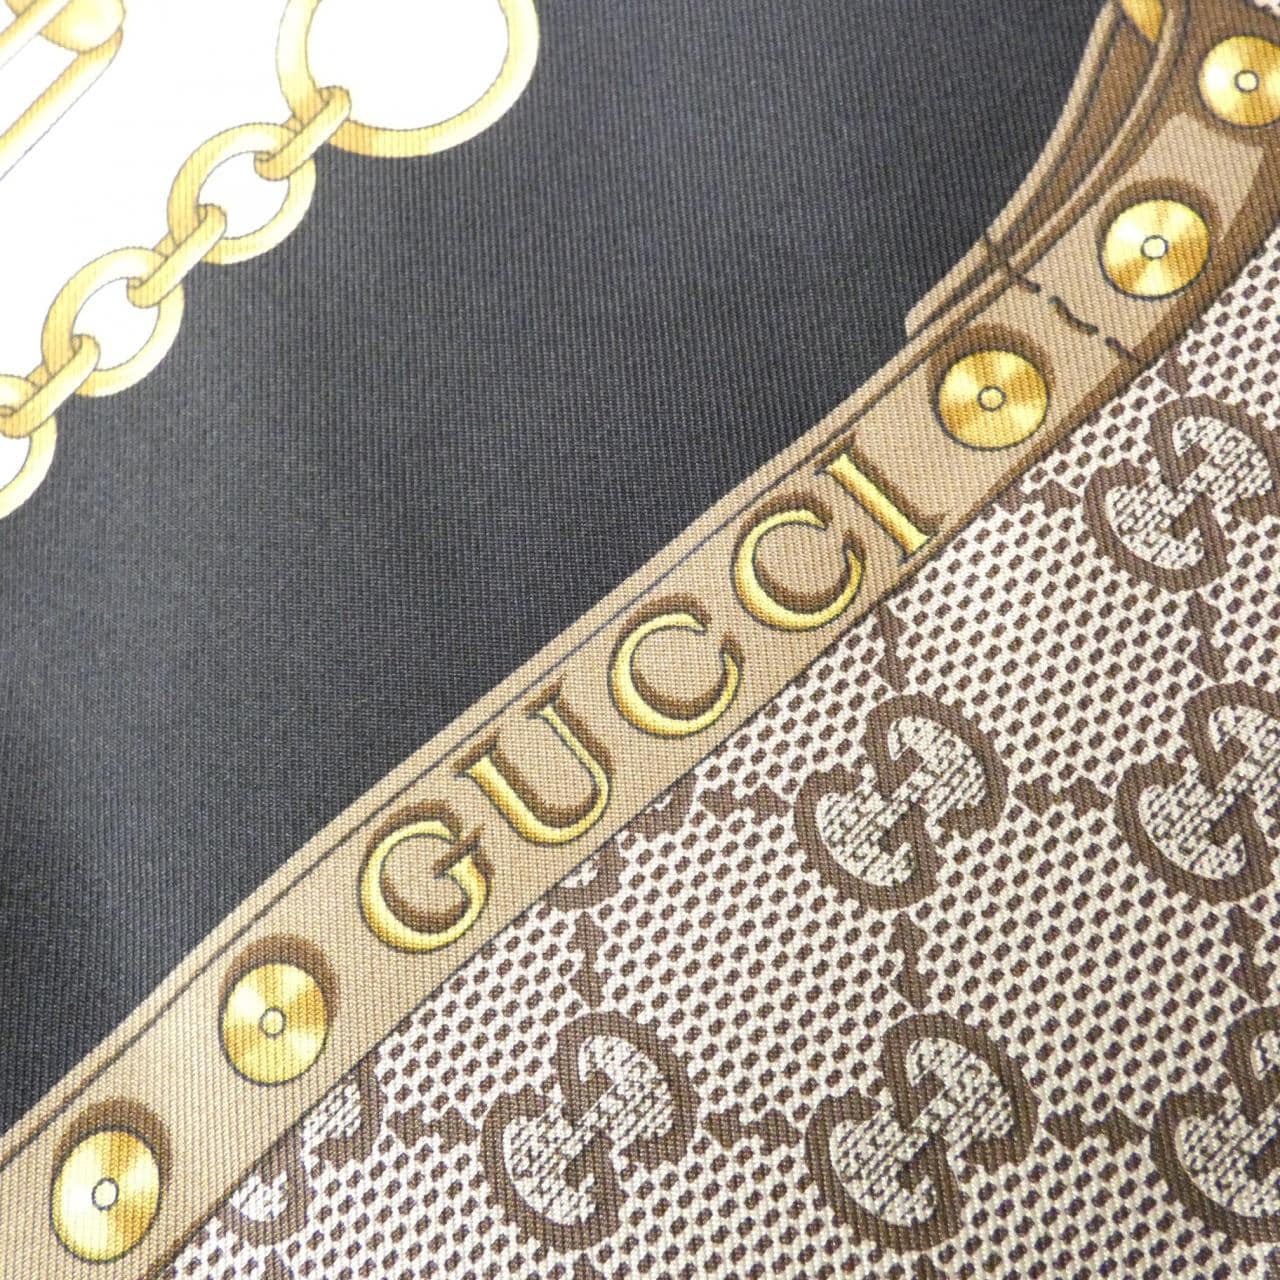 Gucci 508796 3G001丝巾